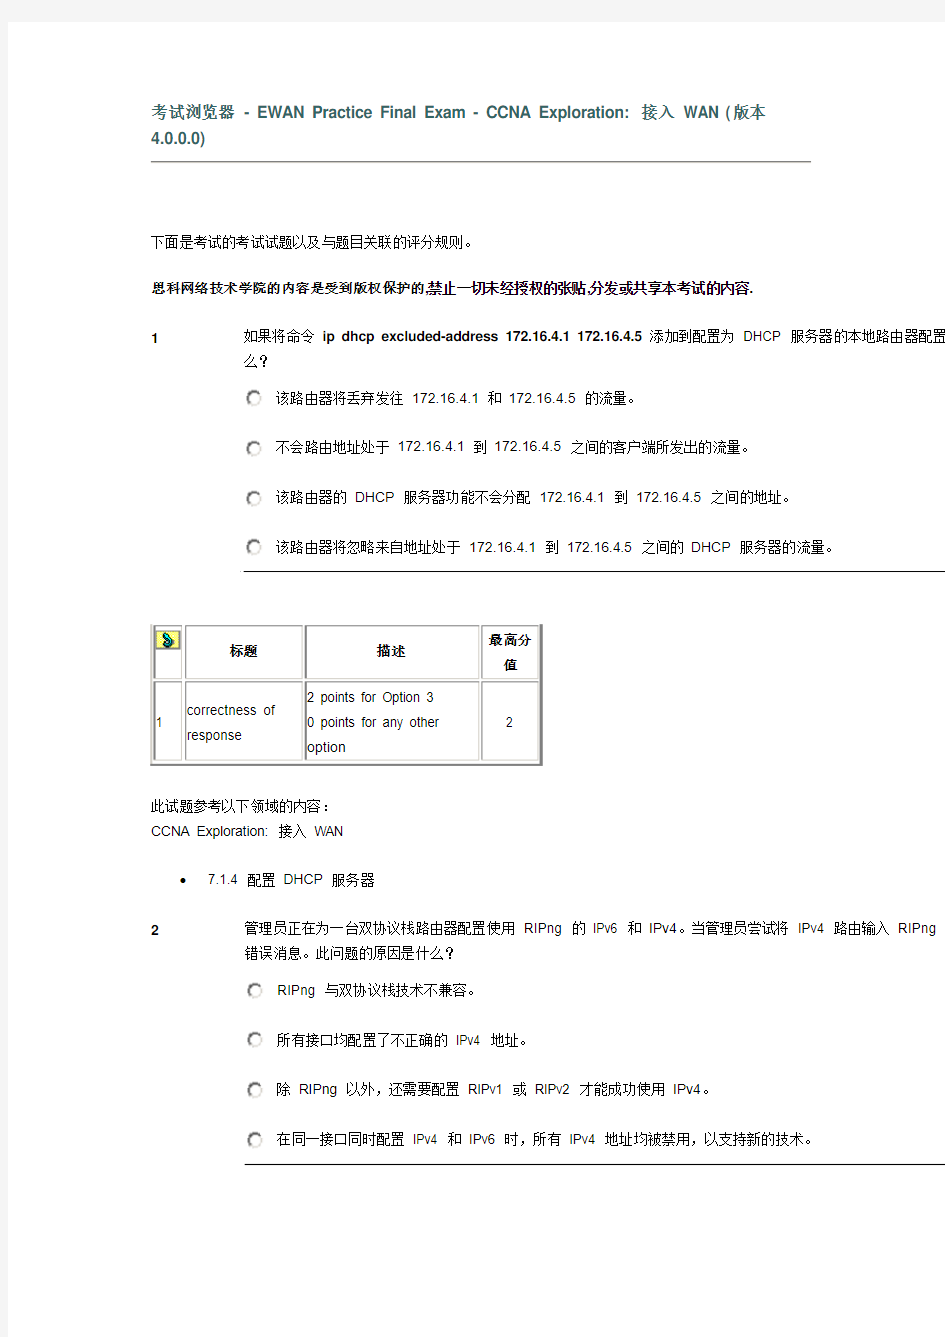 EWAN Final Exam - Chinese Simplified EWAN Practice Final Exam